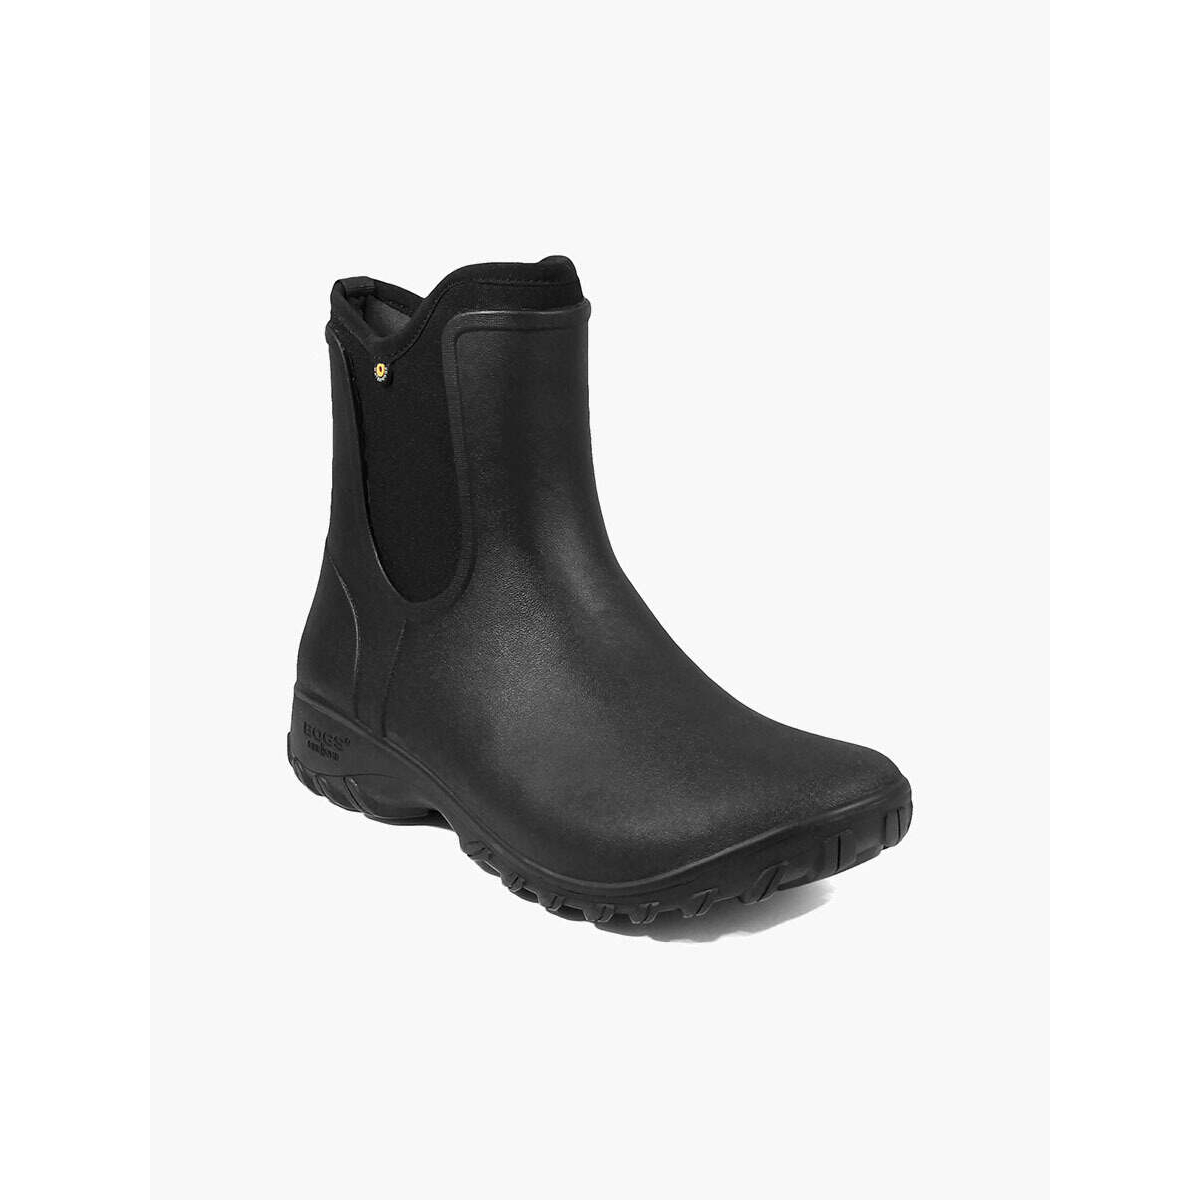 BOGS Women's Sauvie Slip On Waterproof Rain Boots Black - 72203-001 - BLACK, 7-M